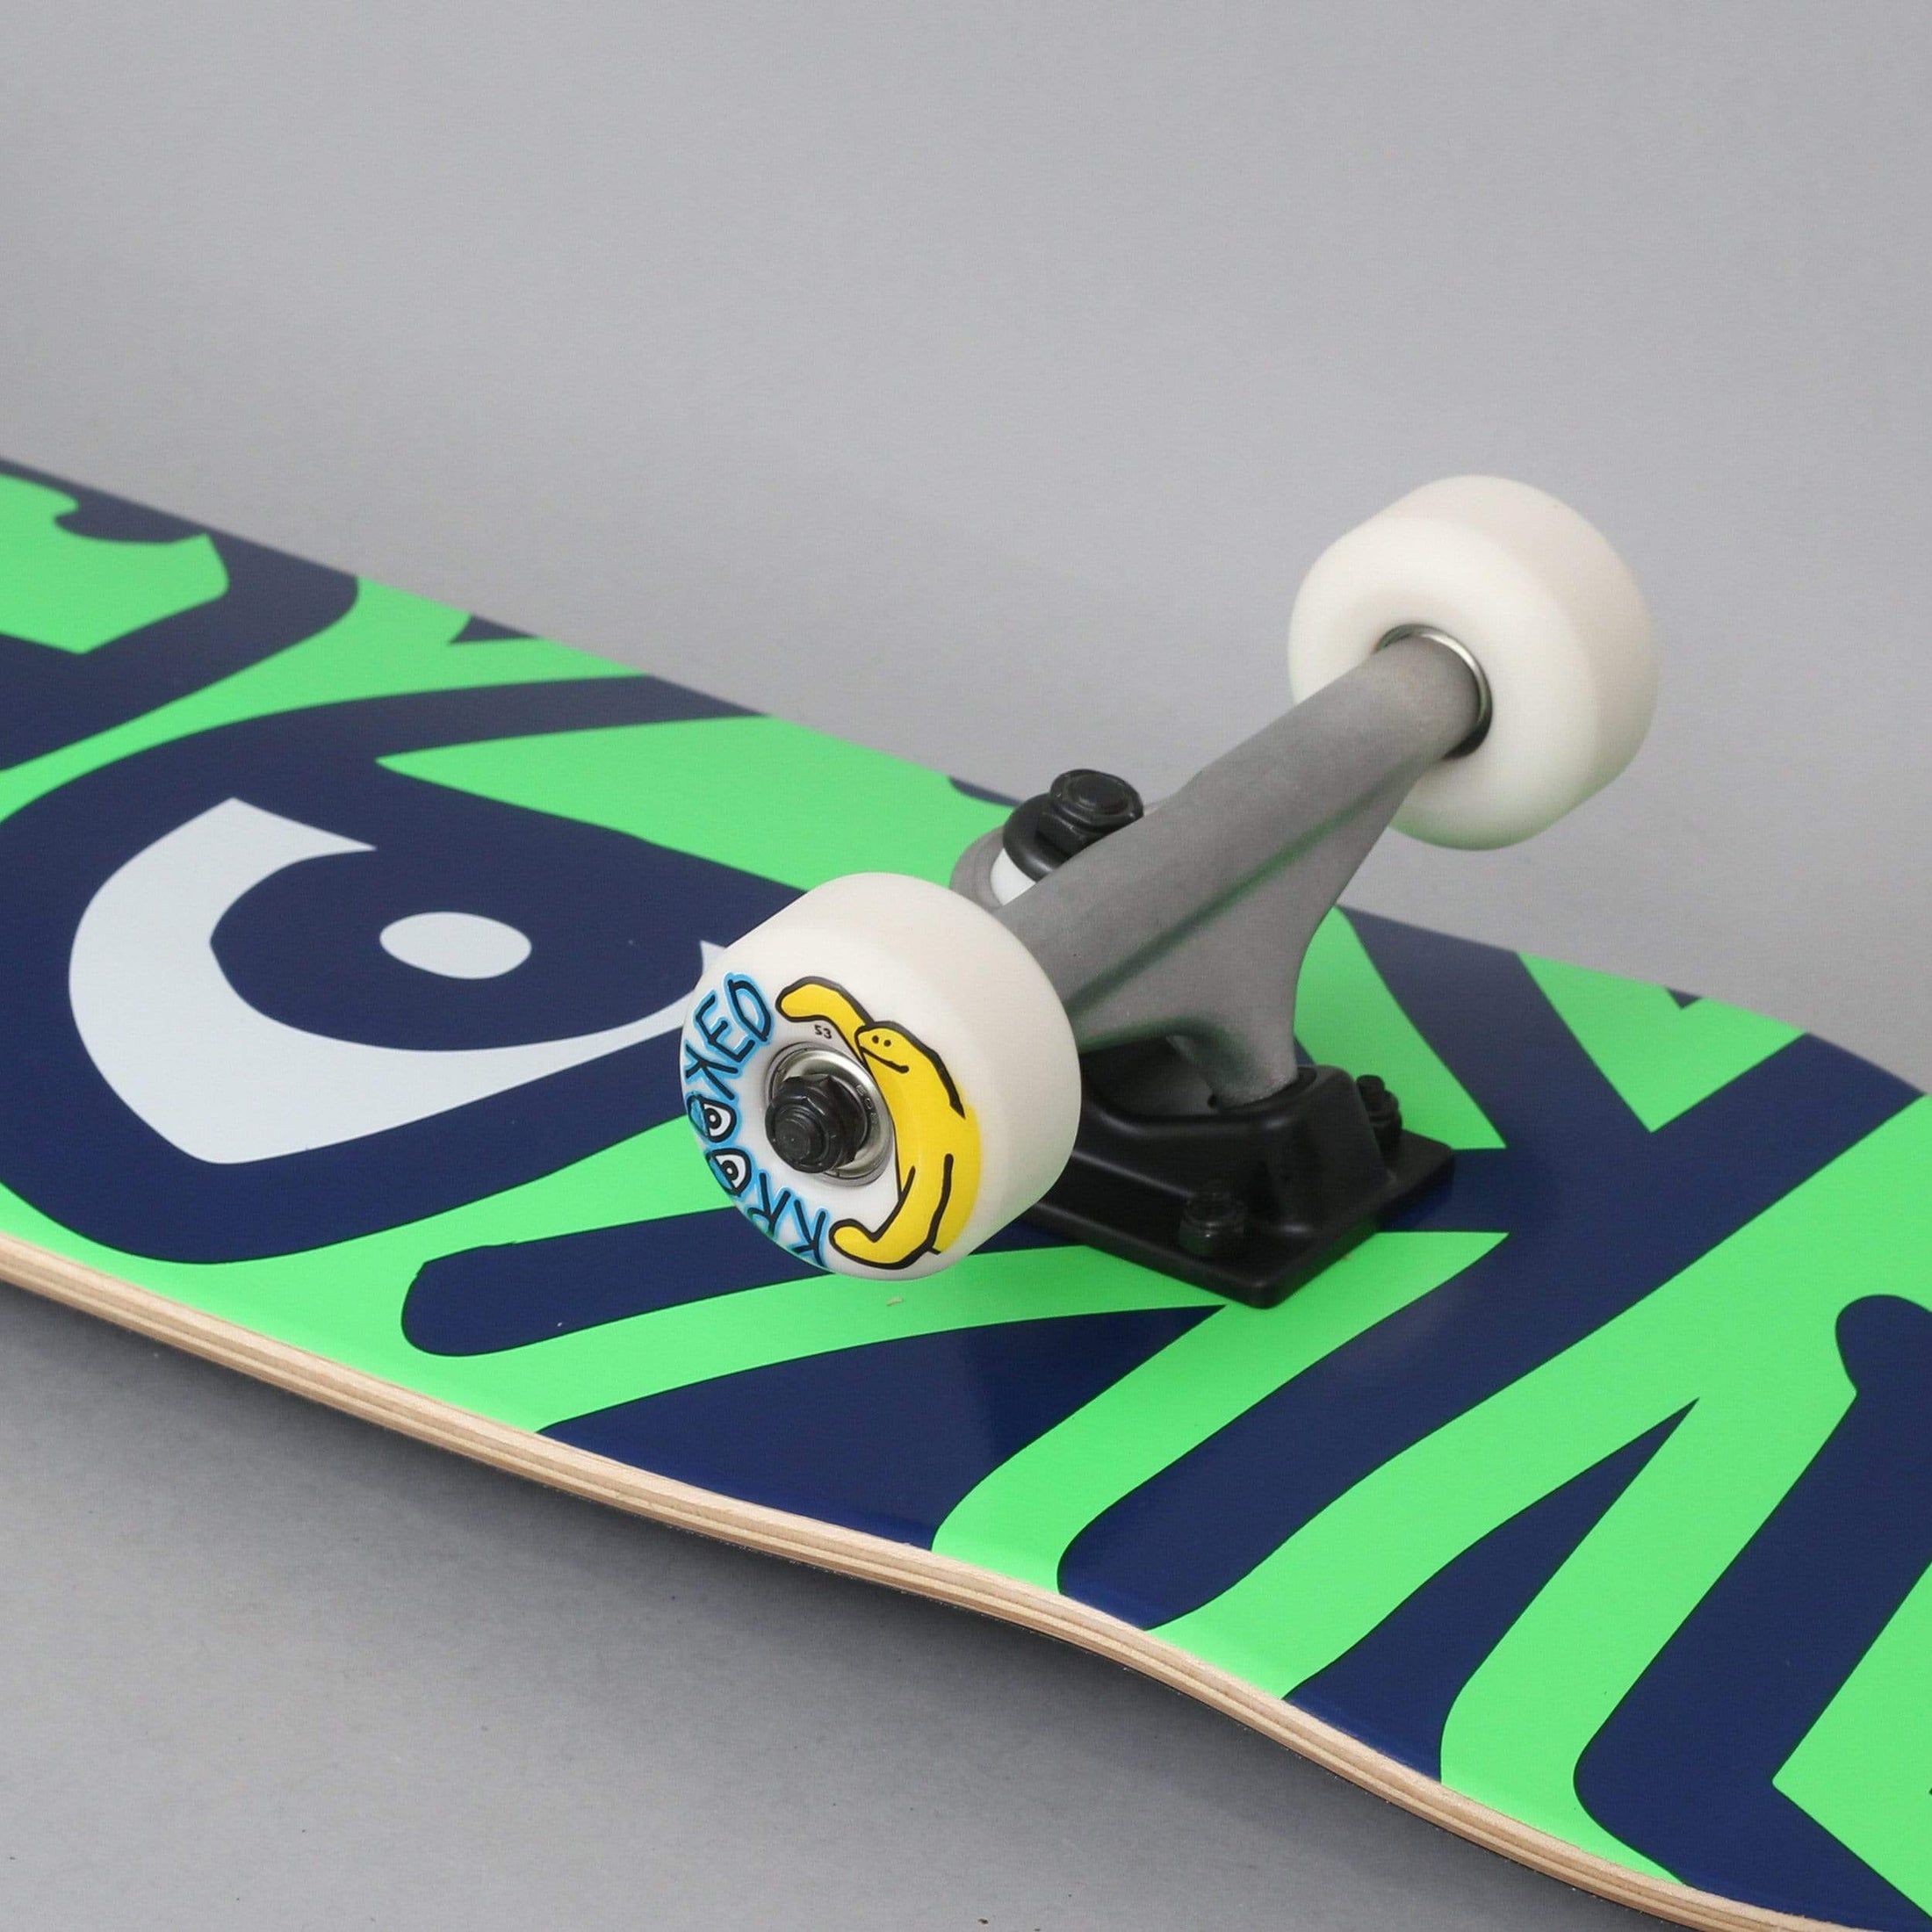 Krooked 8.25 Bigger Eyes X-Large Complete Skateboard Green / Navy